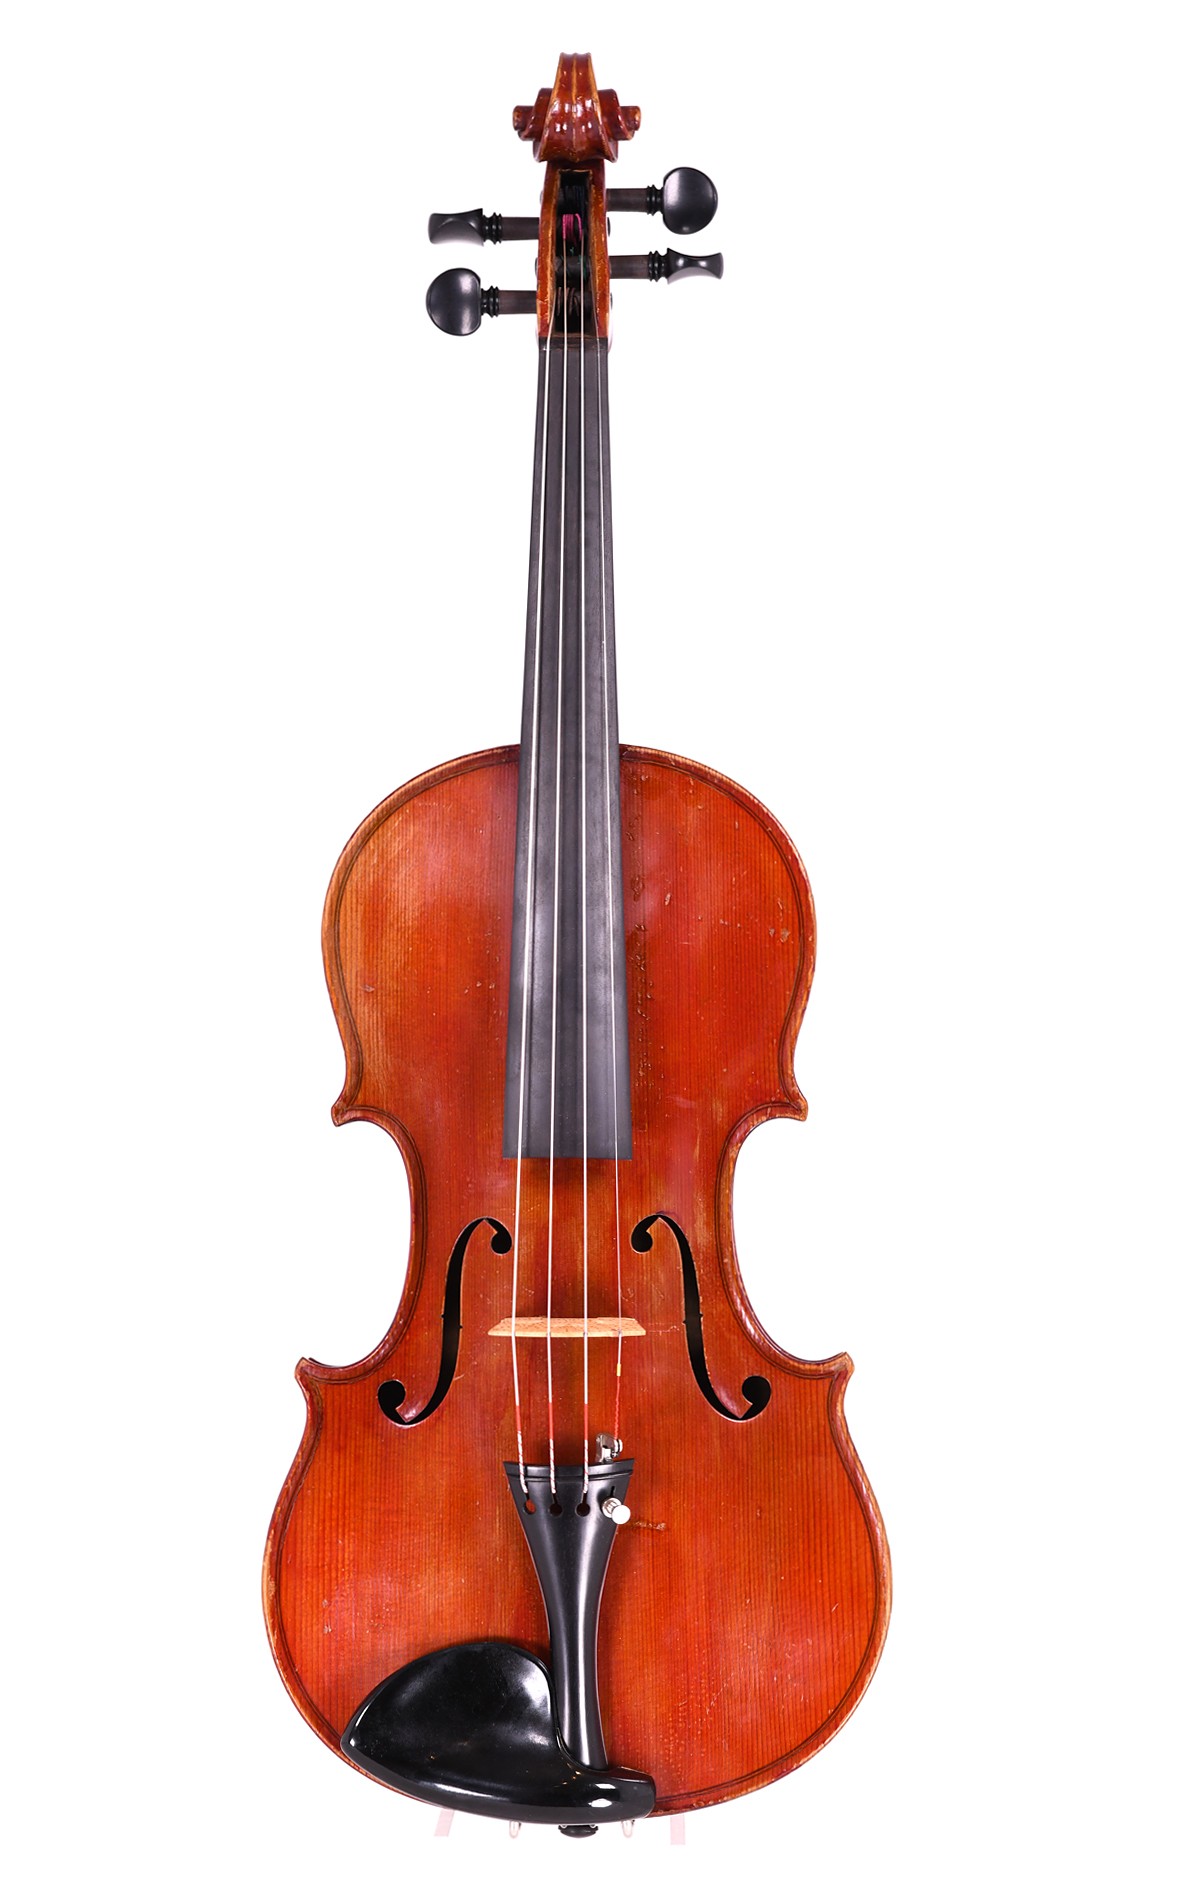 Violin from Saxony, Strad copy - top